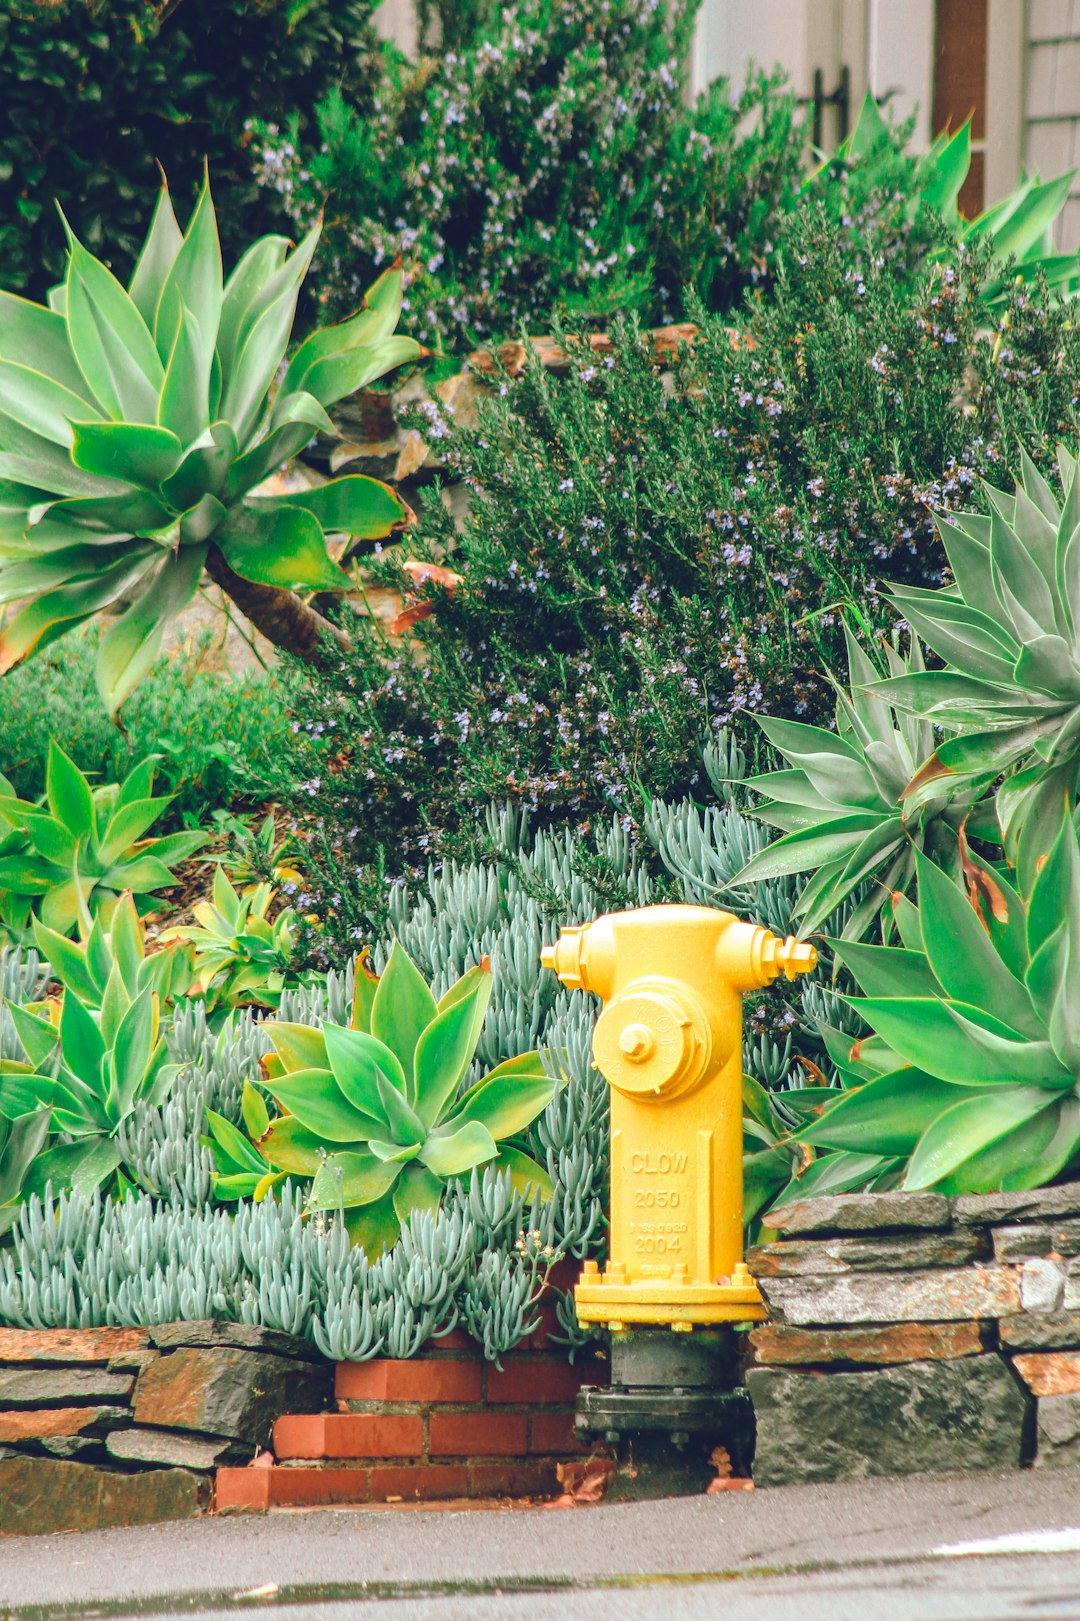 yellow fire hydrant near green plants